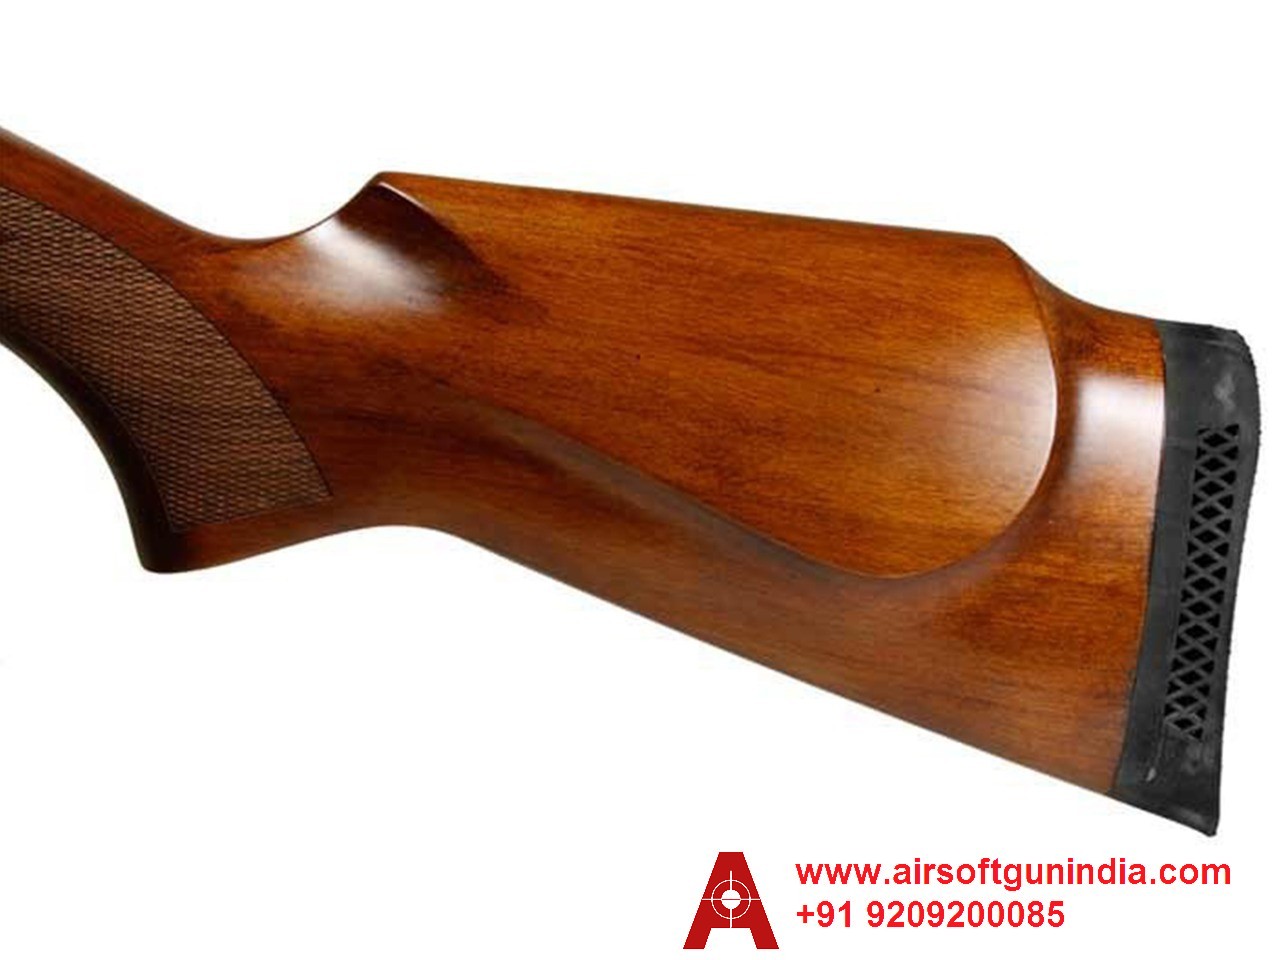 Diana 460 Magnum .177 Underlever Air Rifle By Airsoft Gun India.